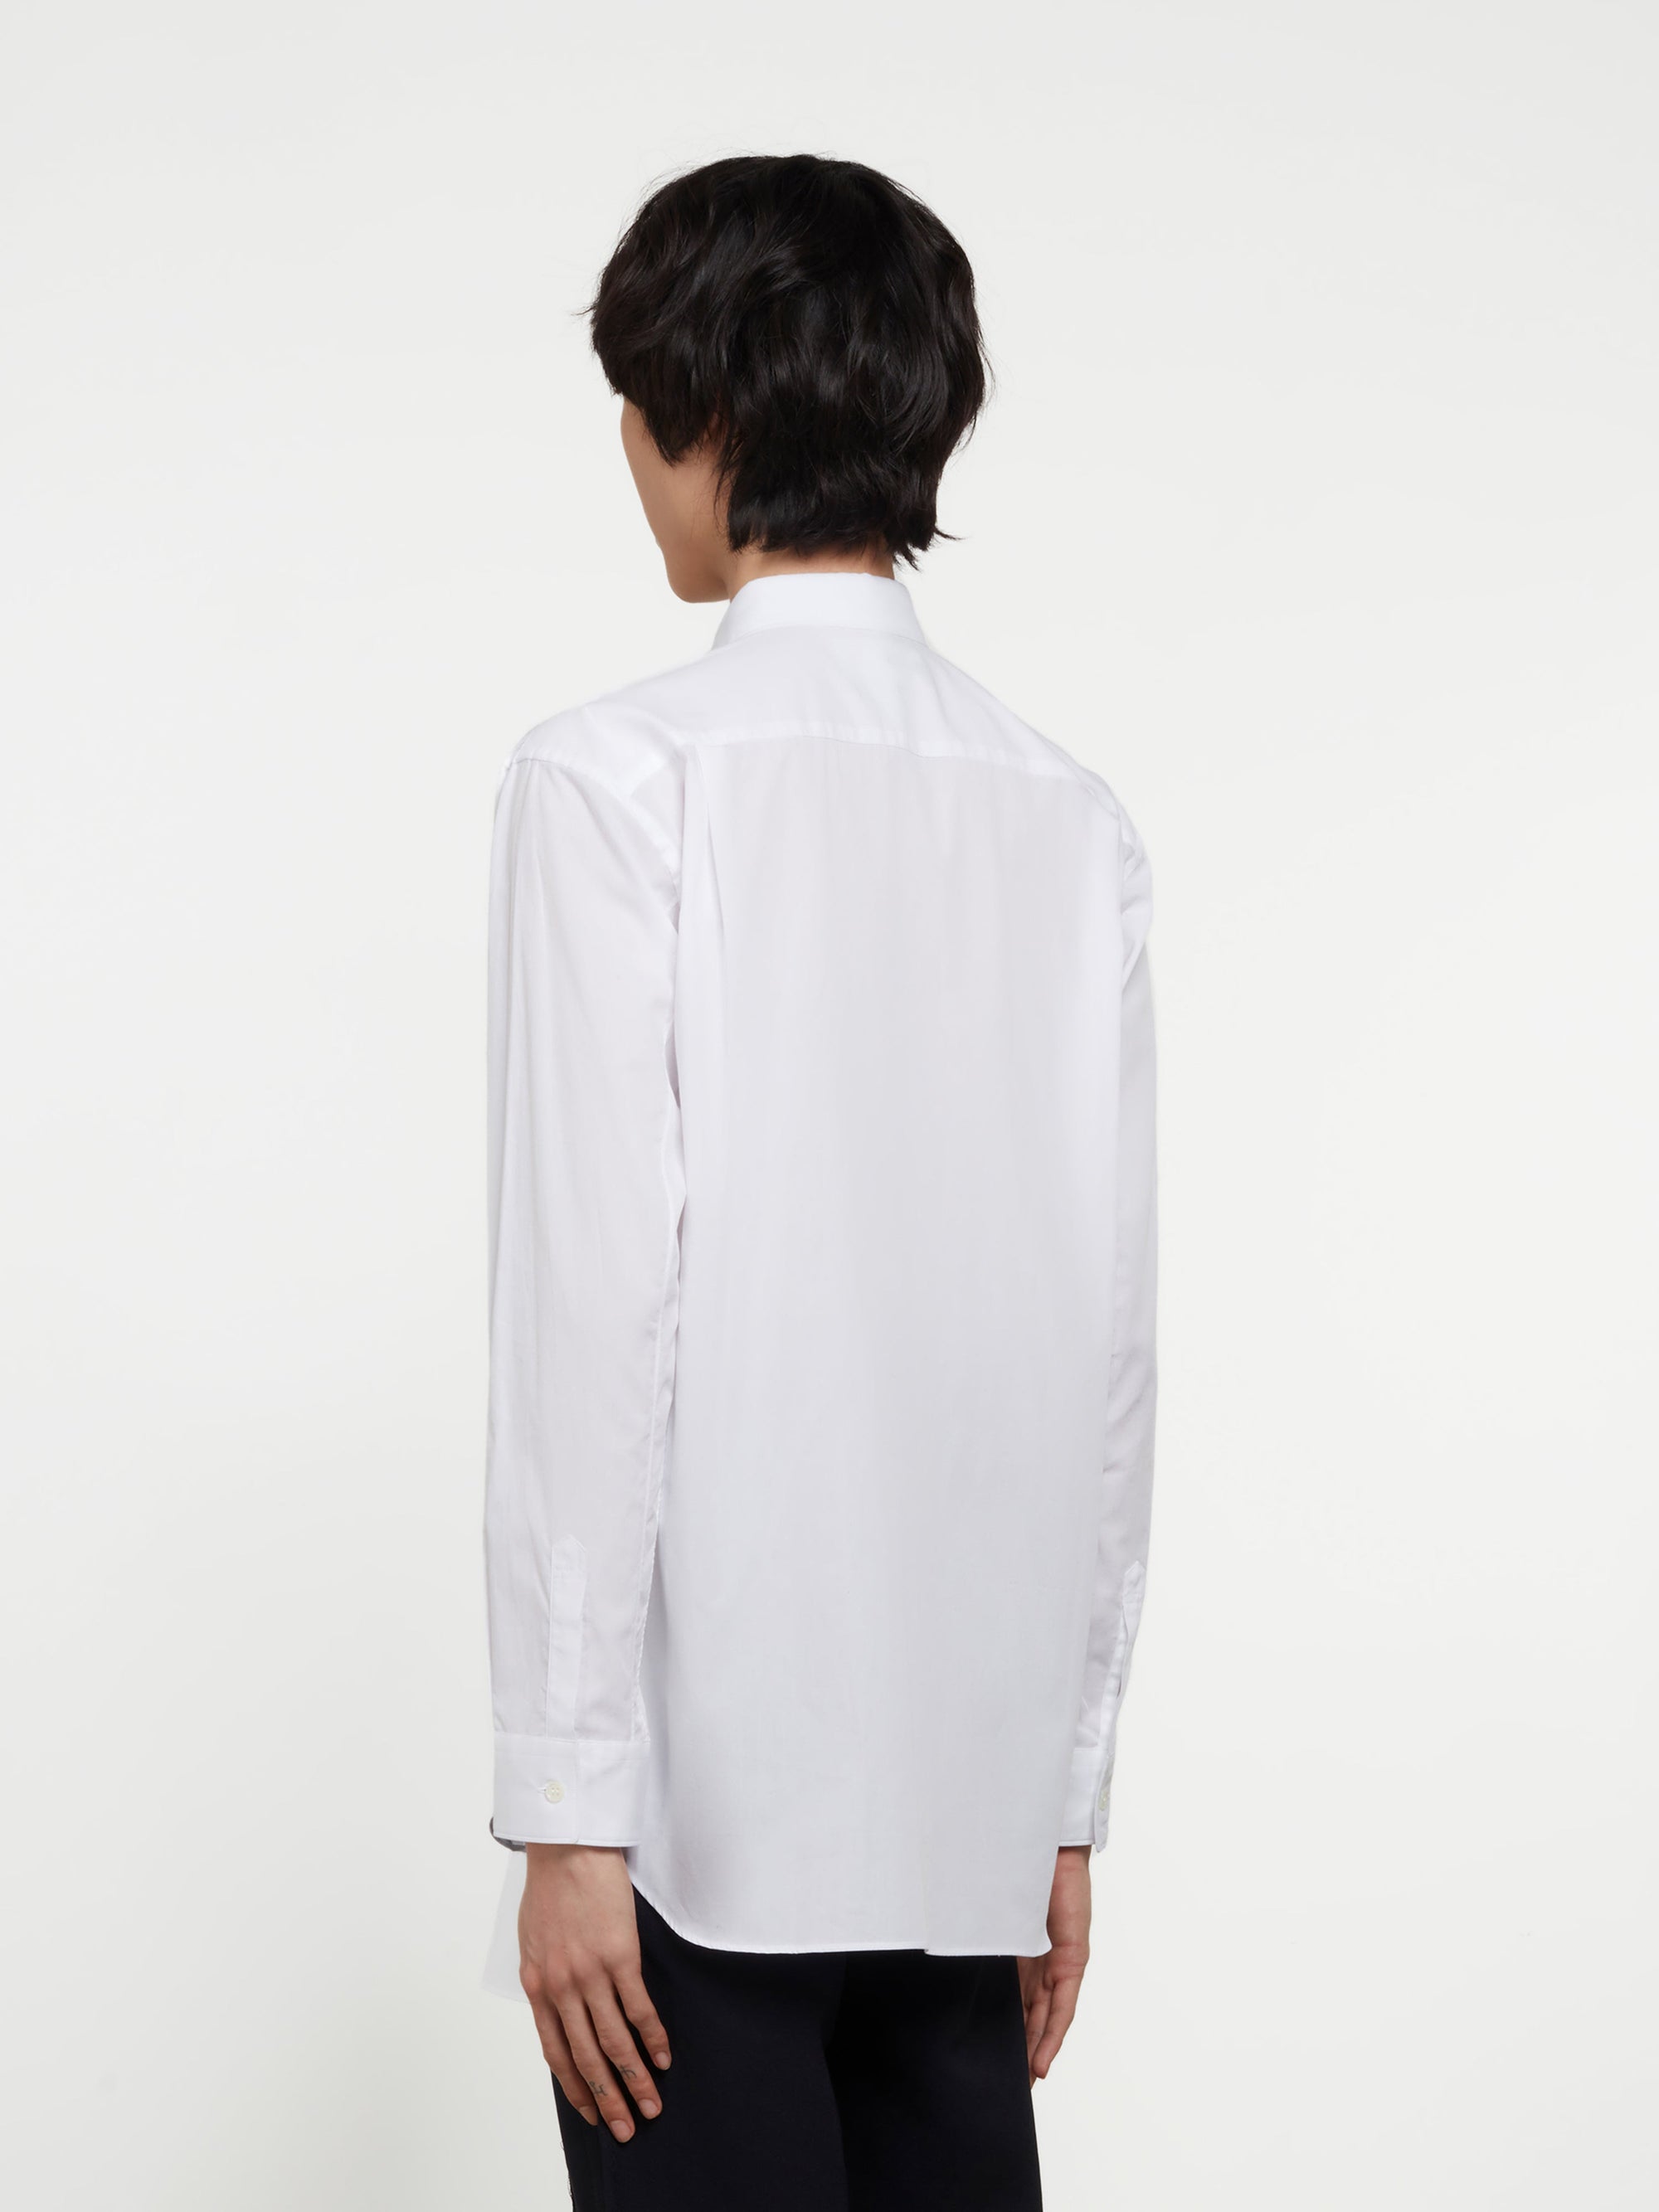 CDG Shirt - Lacoste Men's Shirt - (White) view 4